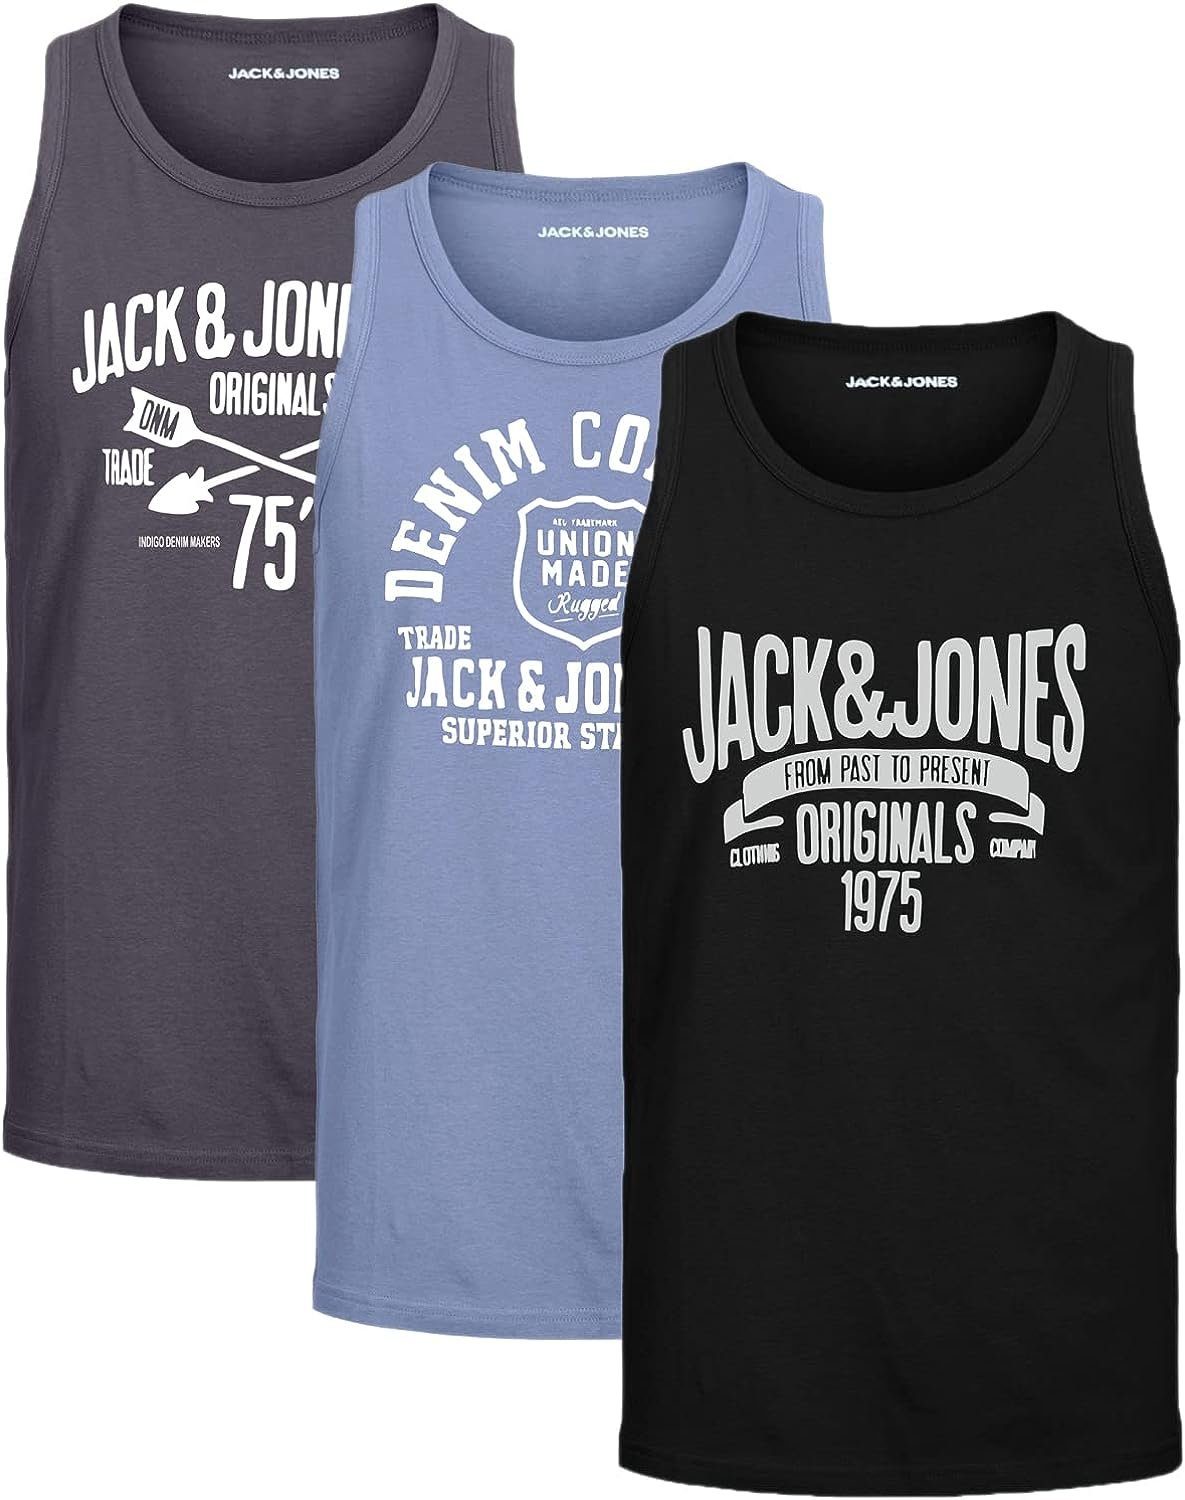 Jack & Jones Tanktop Bequemes Slimfit Shirt mit Printdruck (3er-Pack) unifarbenes Oberteil aus Baumwolle, Größe M